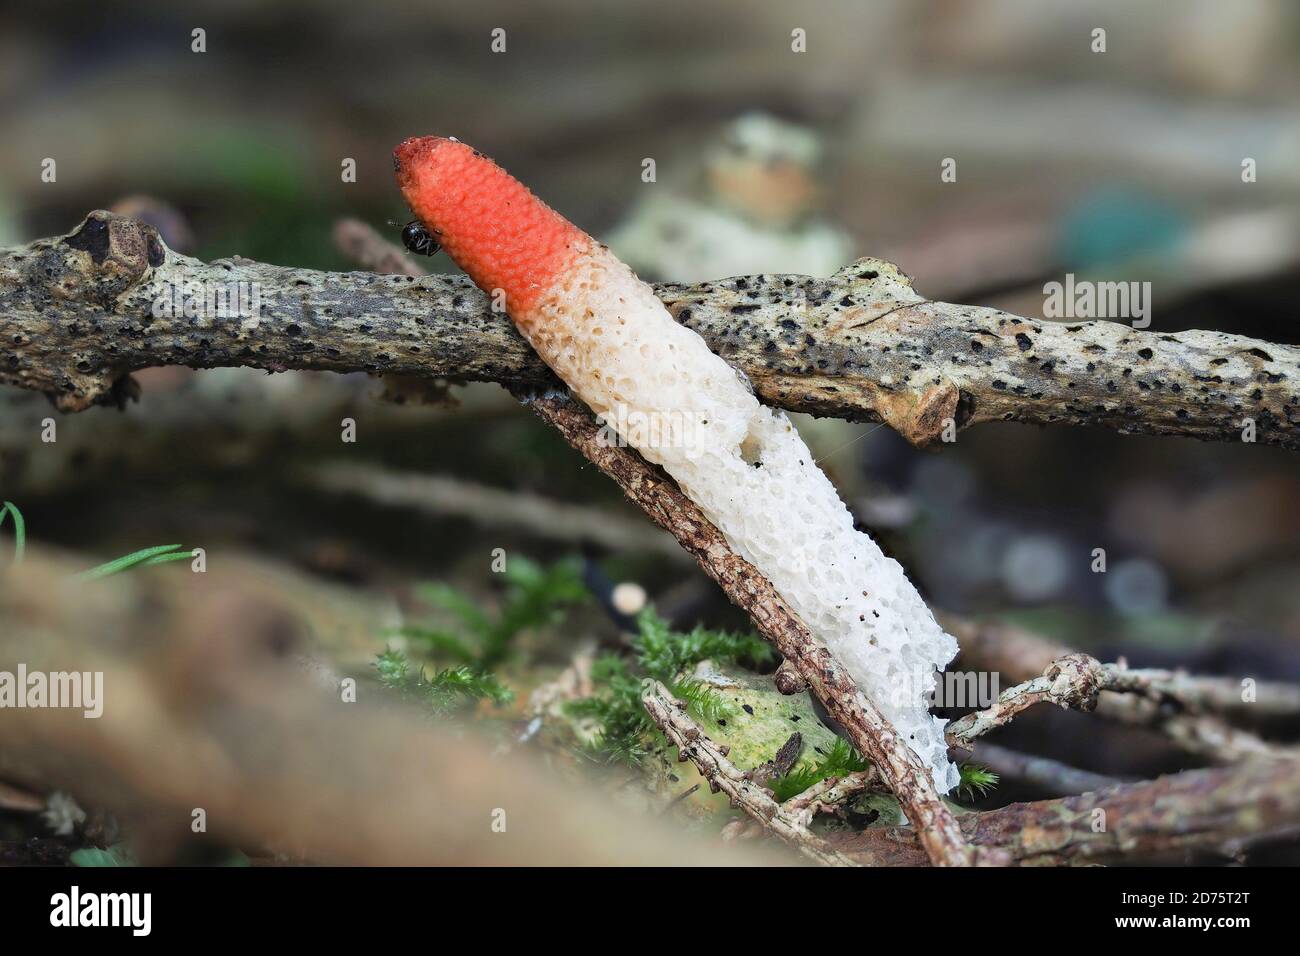 The Dog Stinkhorn (Mutinus caninus) is an inedible mushroom , stacked macro photo Stock Photo